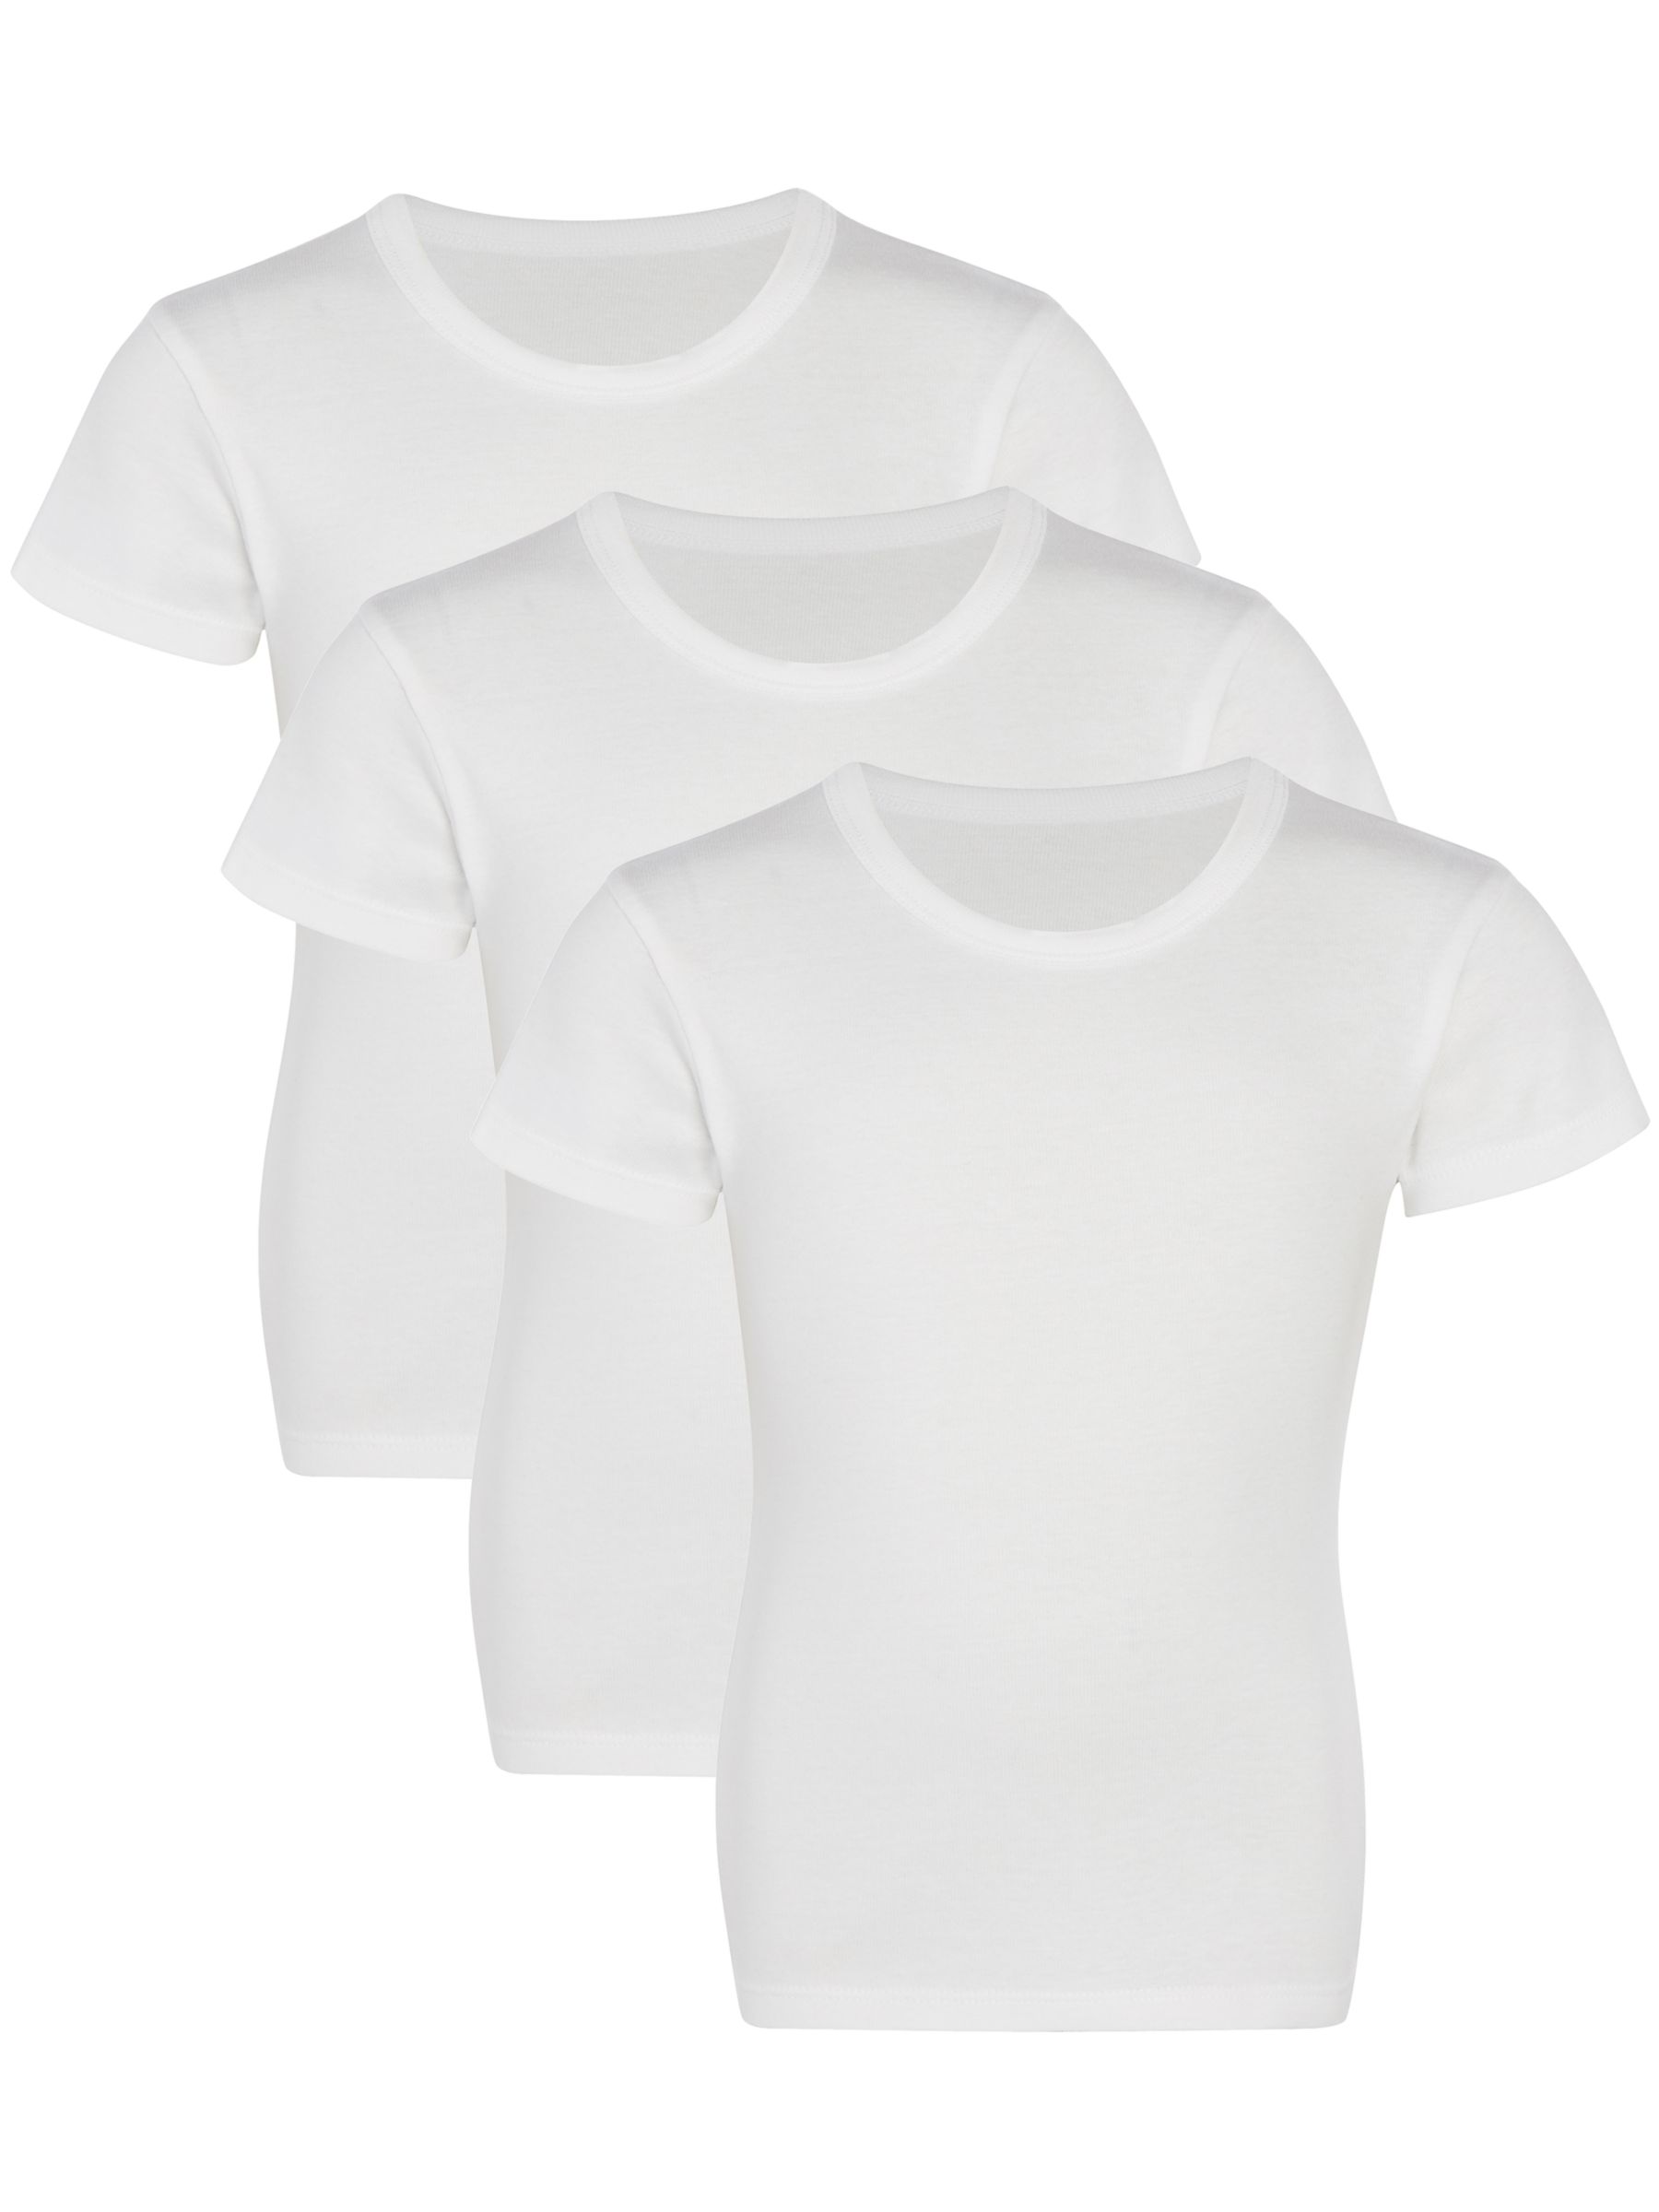 John Lewis  Kids' Short Sleeve T-Shirt Vest, Pack of 3, White ANYDAY